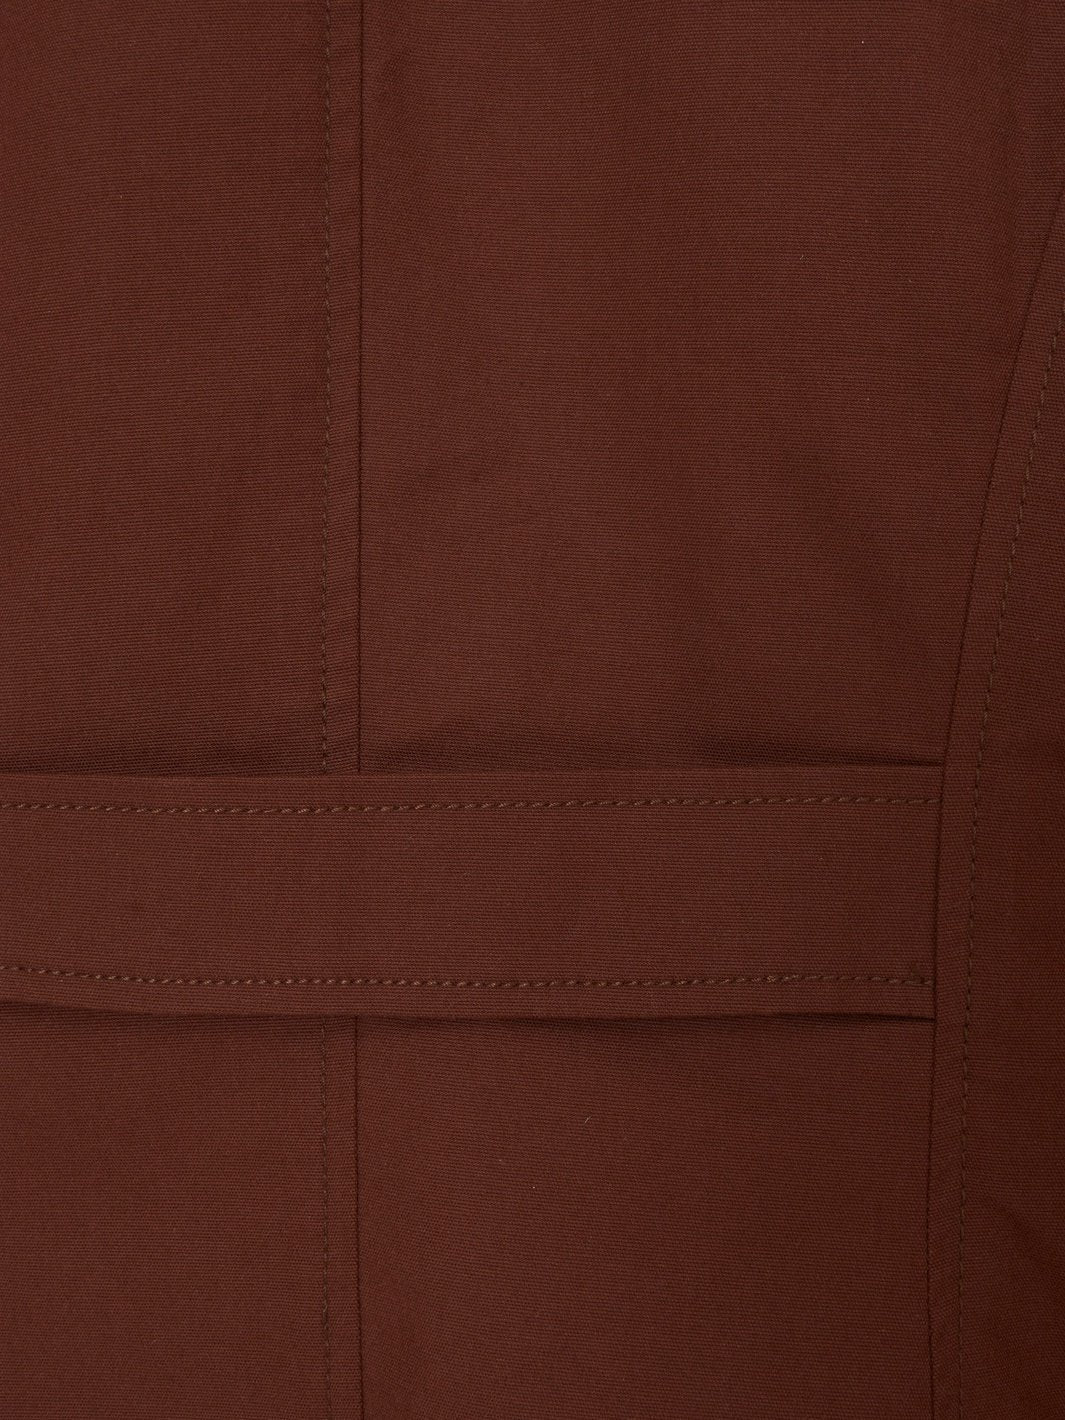 2010 Borbonese suit in brown cotton